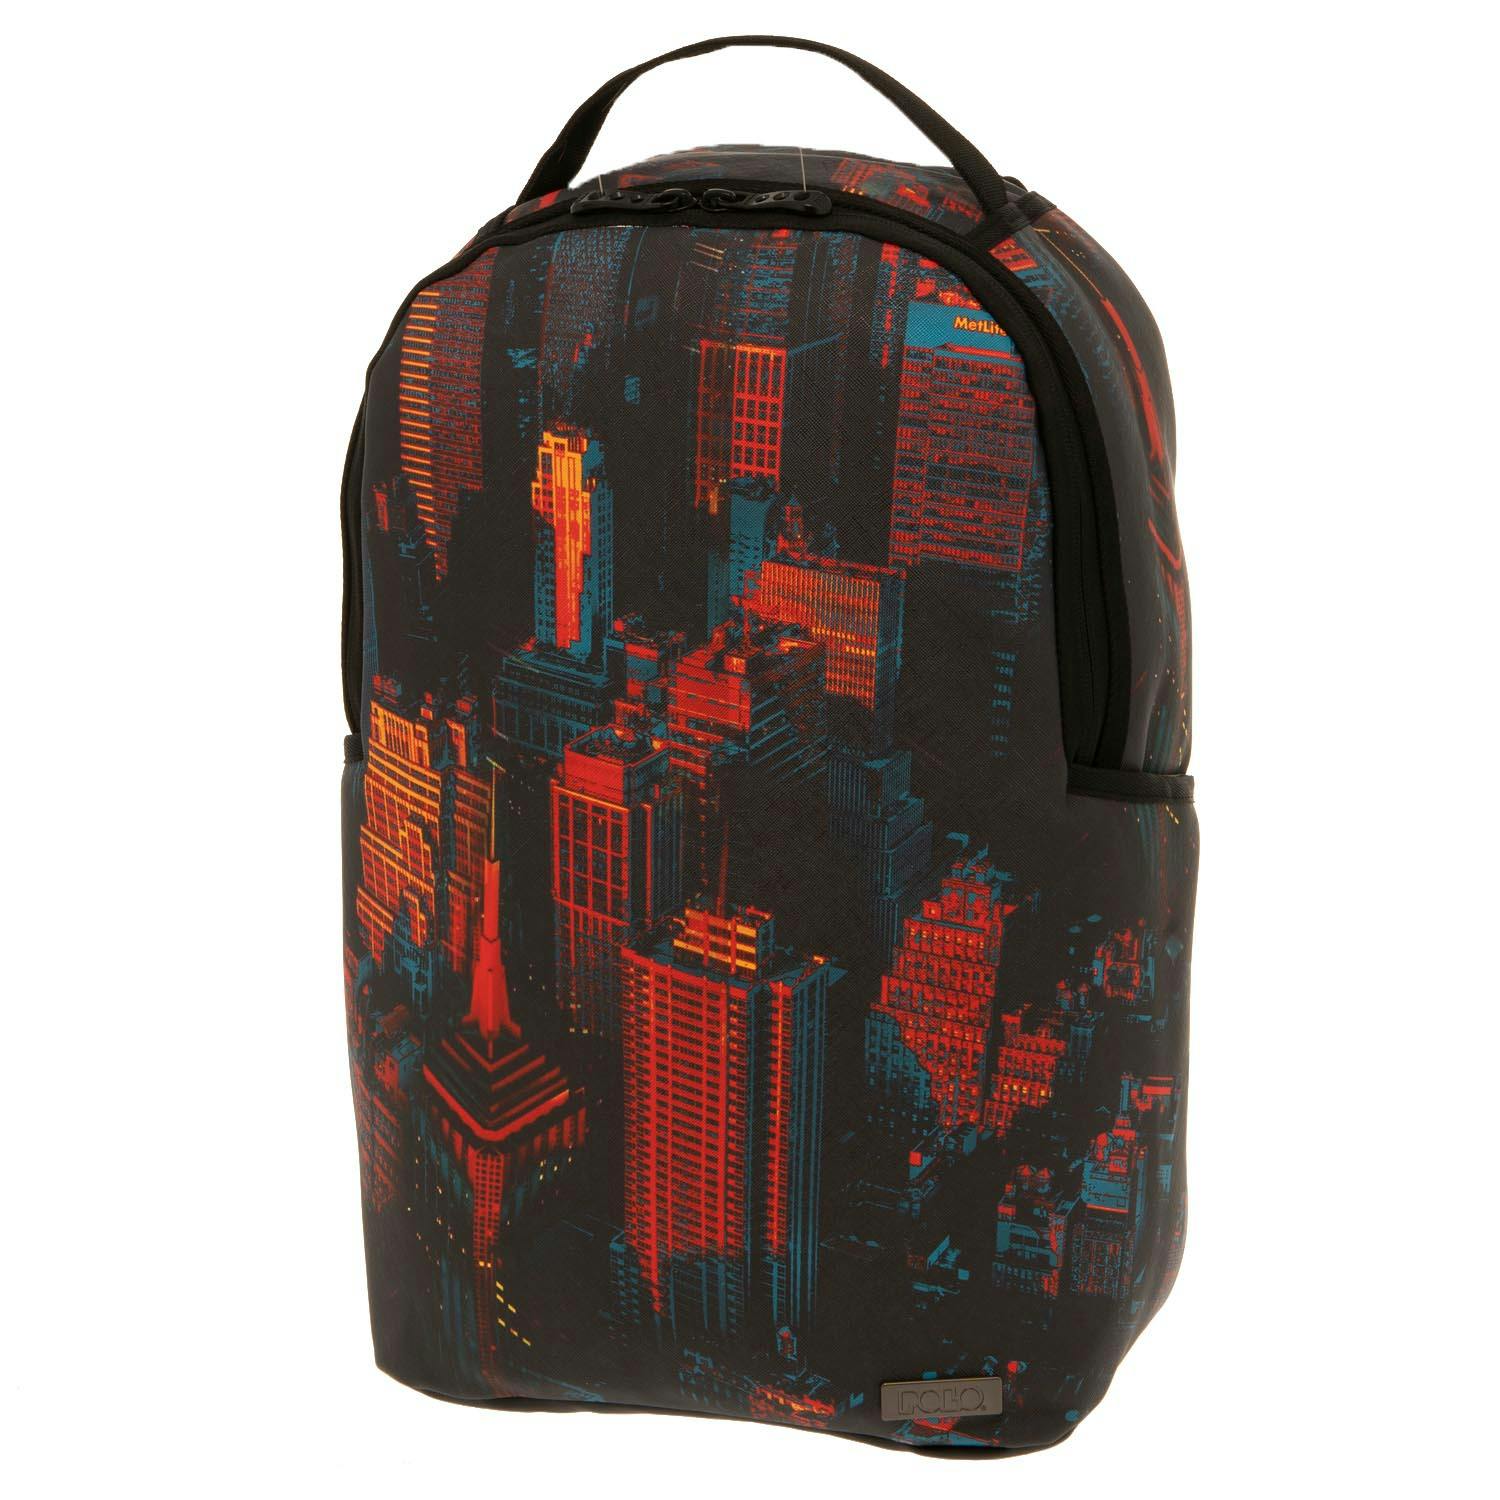 Polo Backpack ROVER Print Σχολική Τσάντα Πλάτης Χρώμα Μαύρο 25 lt Υ47 x Μ30 x Π16 cm 9-01-028-8156 laptop case & secret case